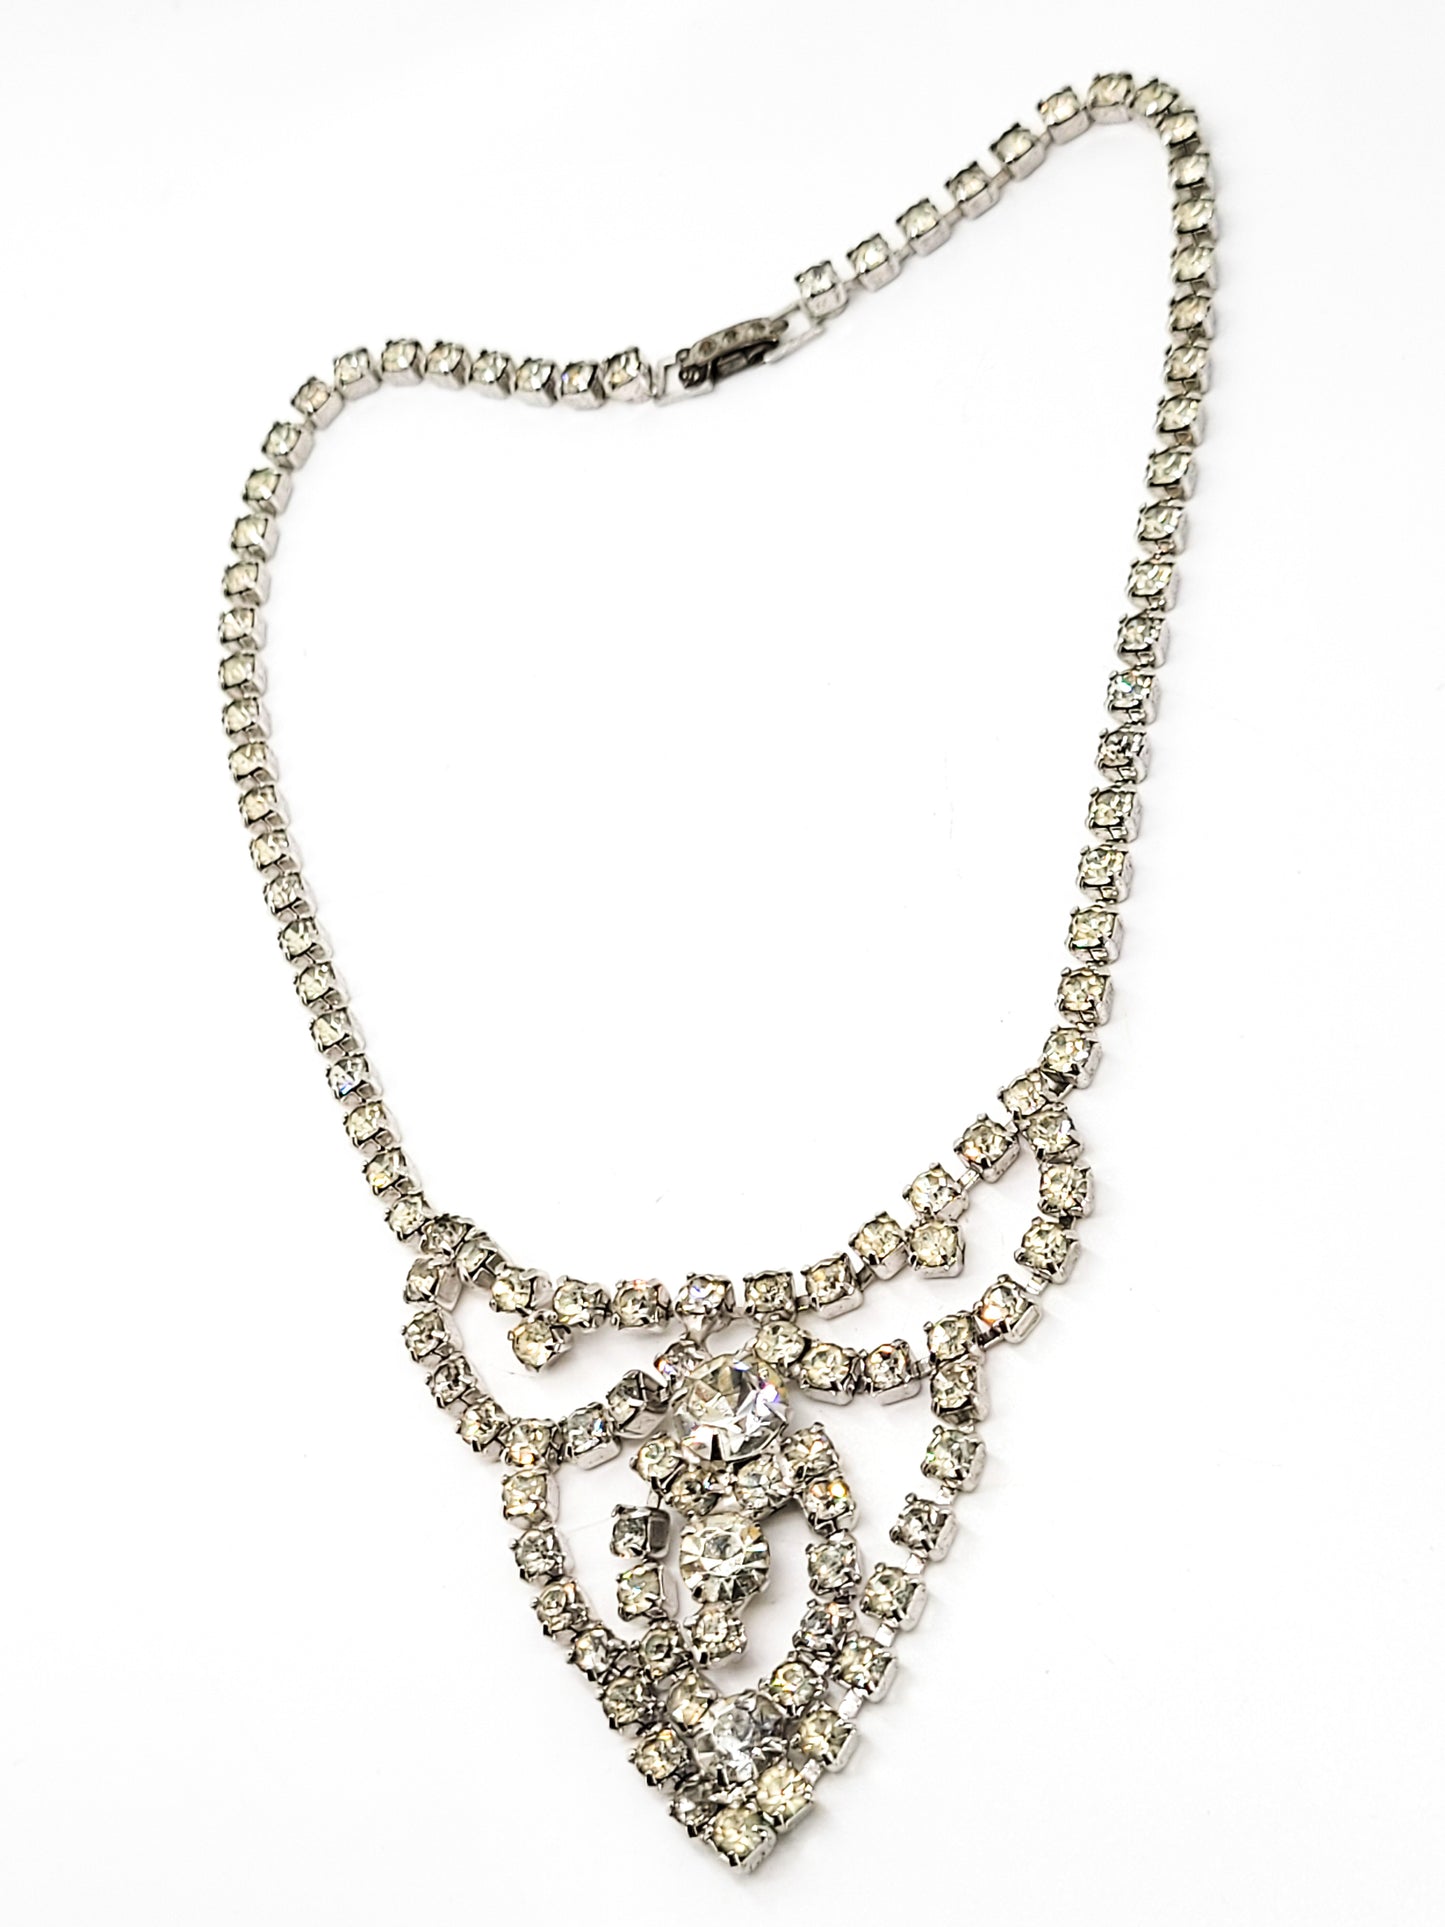 Large Scalloped clear rhinestone vintage bib choker necklace